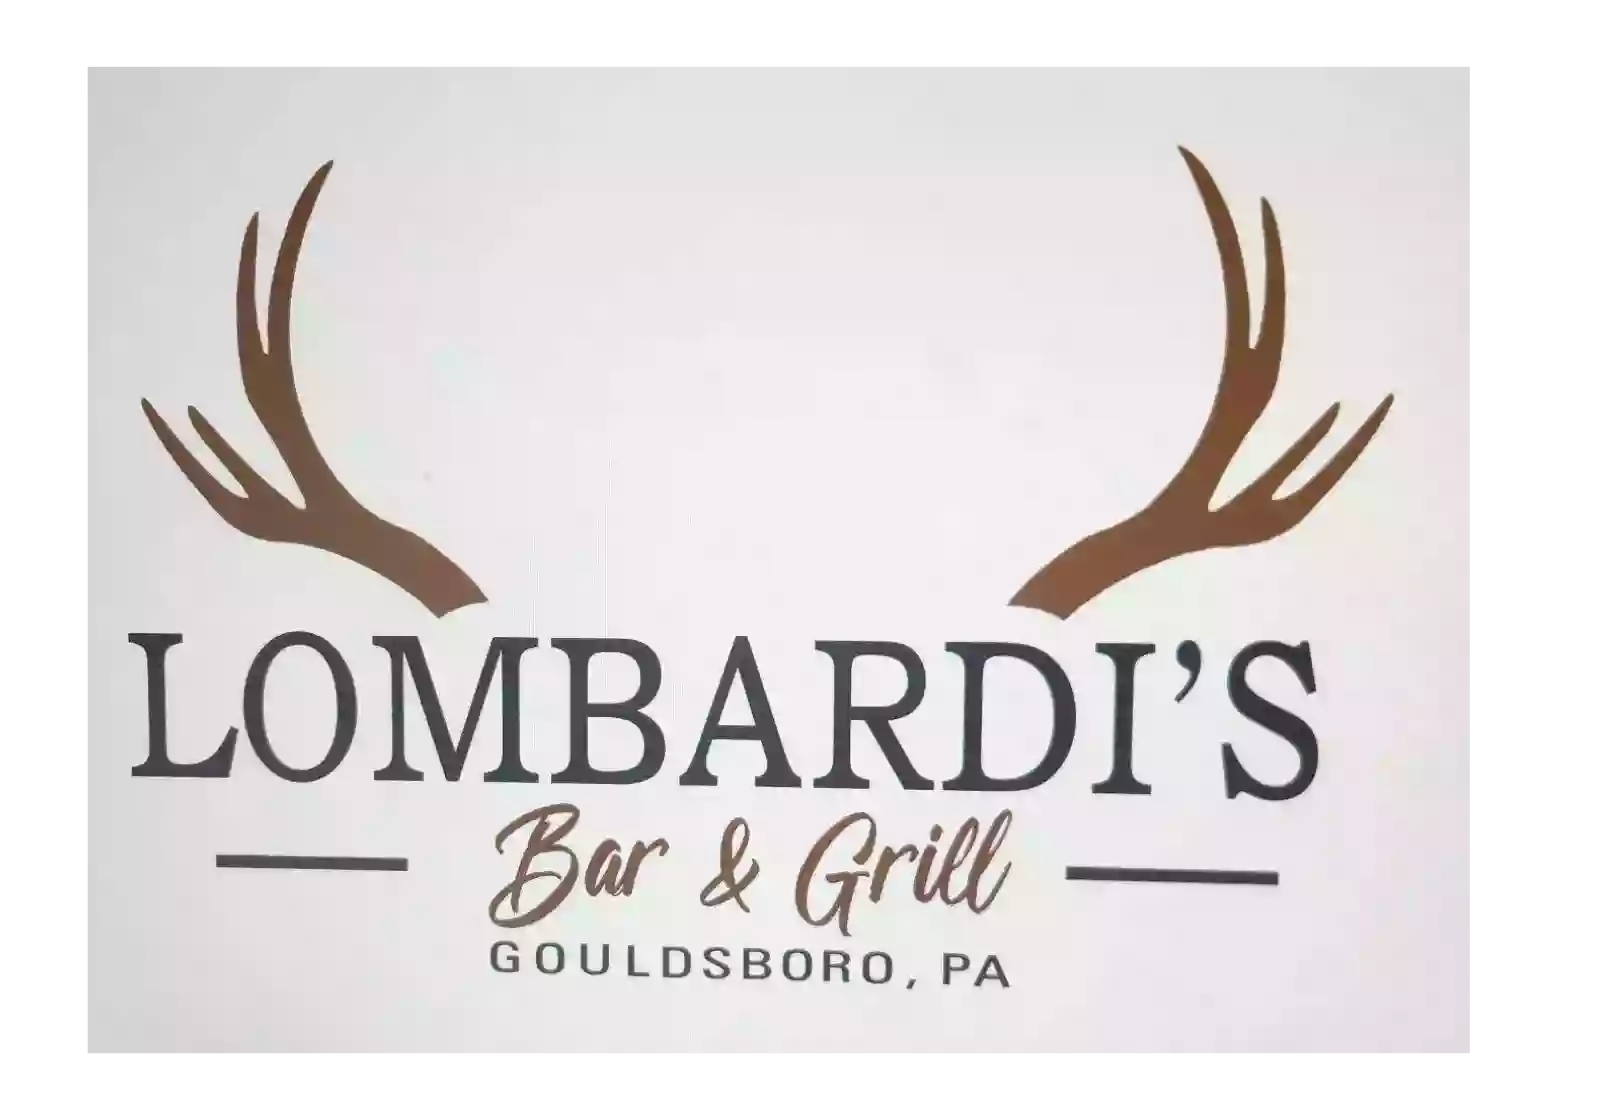 Lombardis Bar & Grill